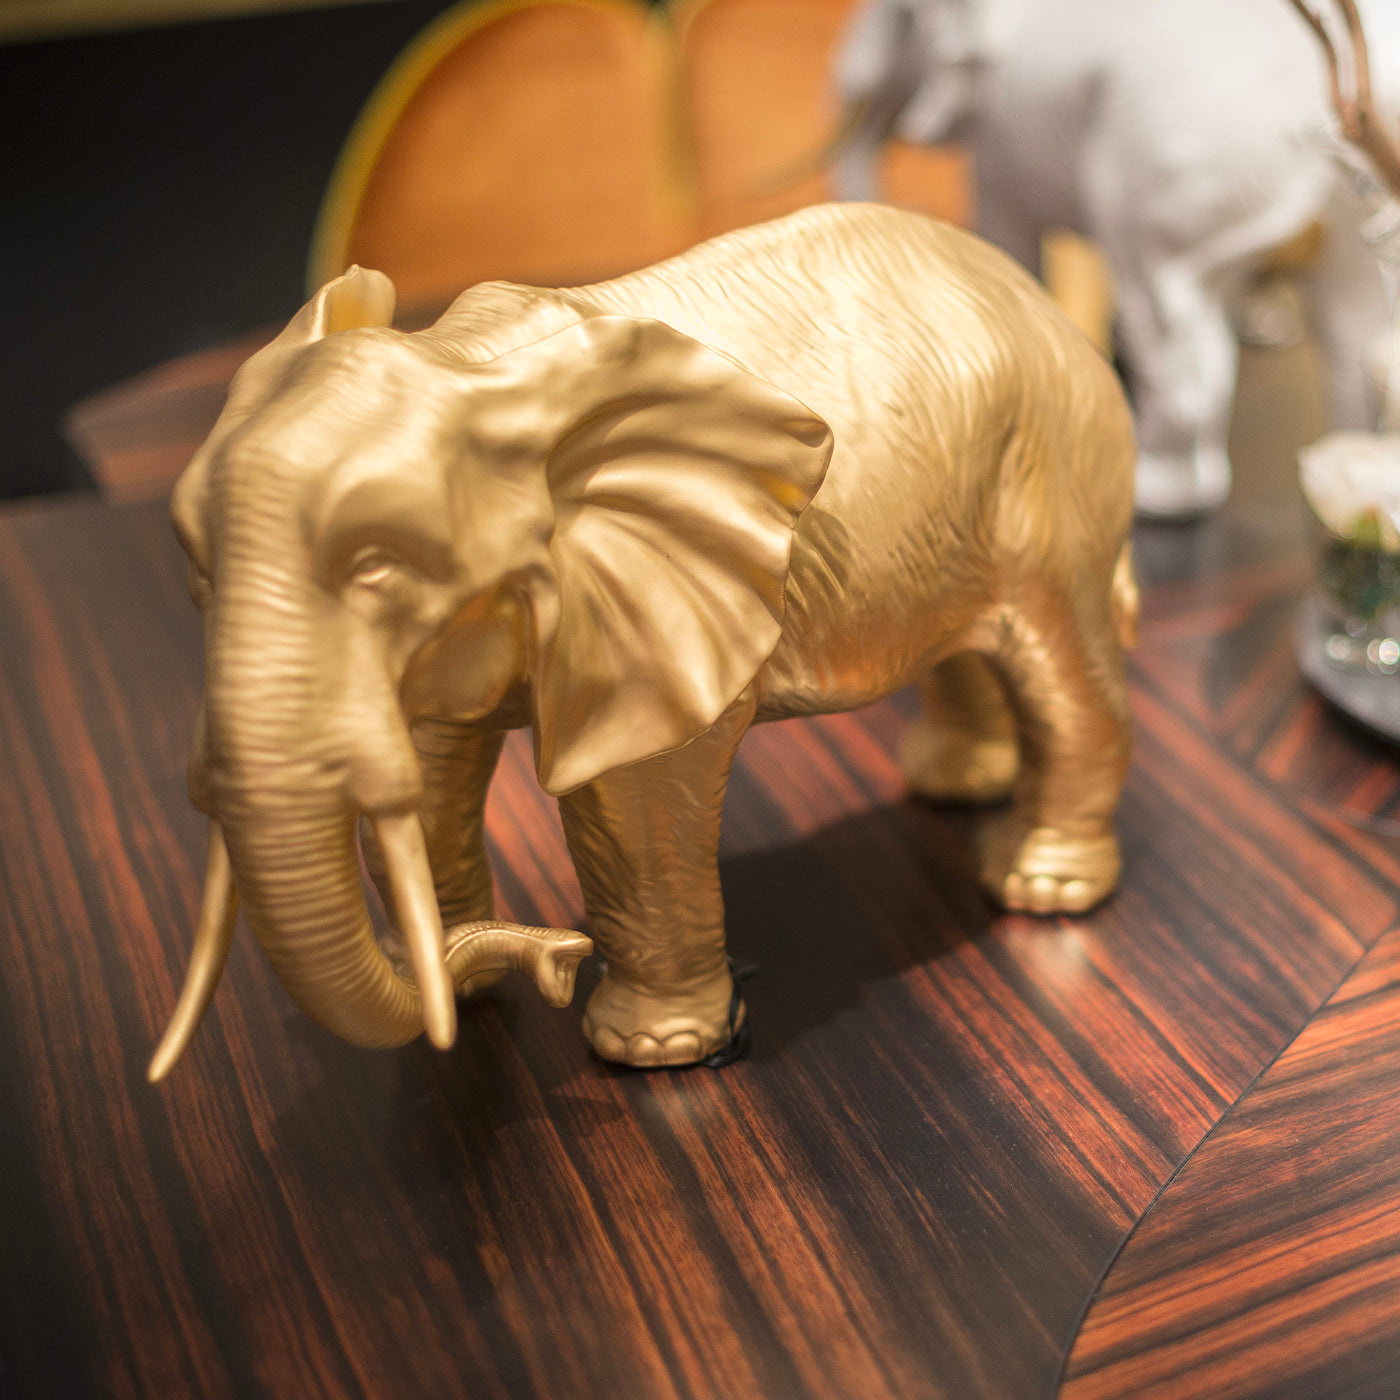 African Father Elephant-Shaped Golden Sculpture - Alternative view 1